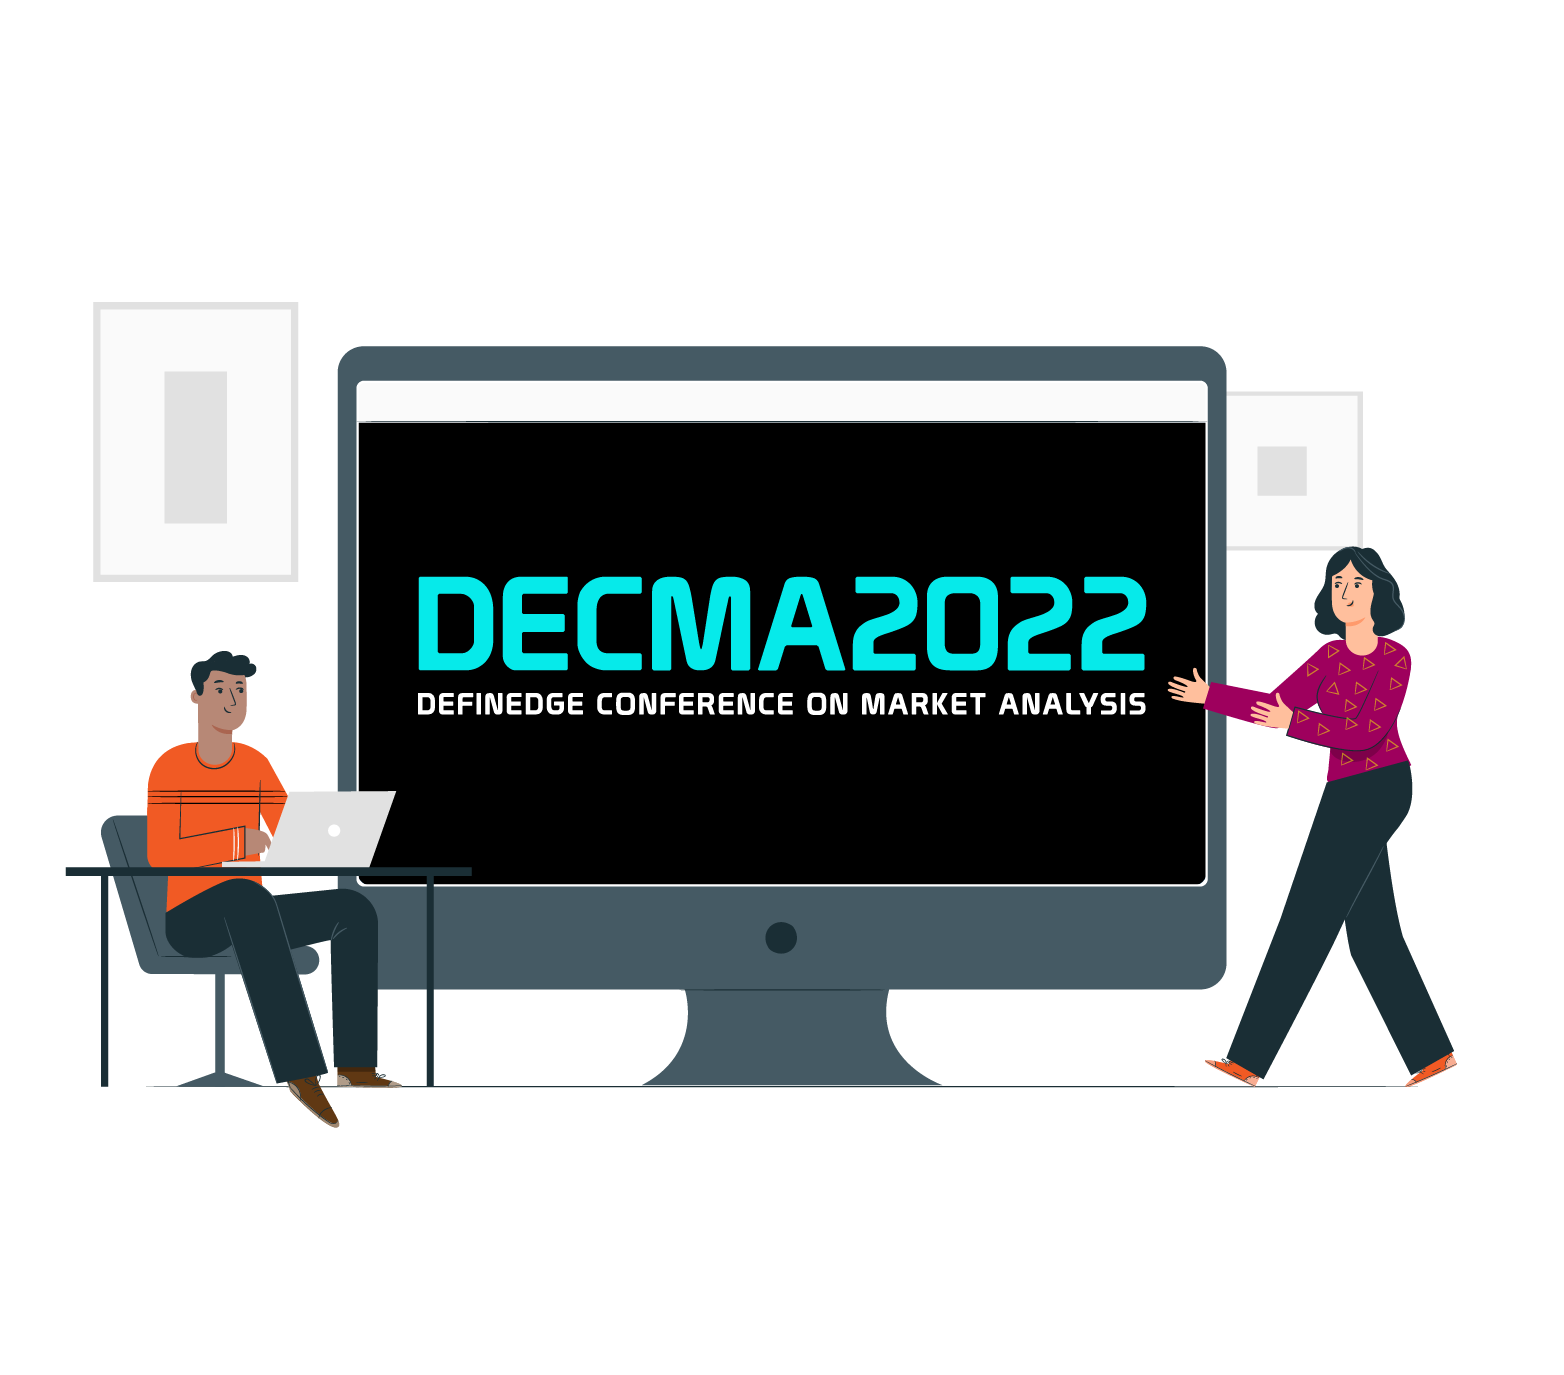 DECMA 2022